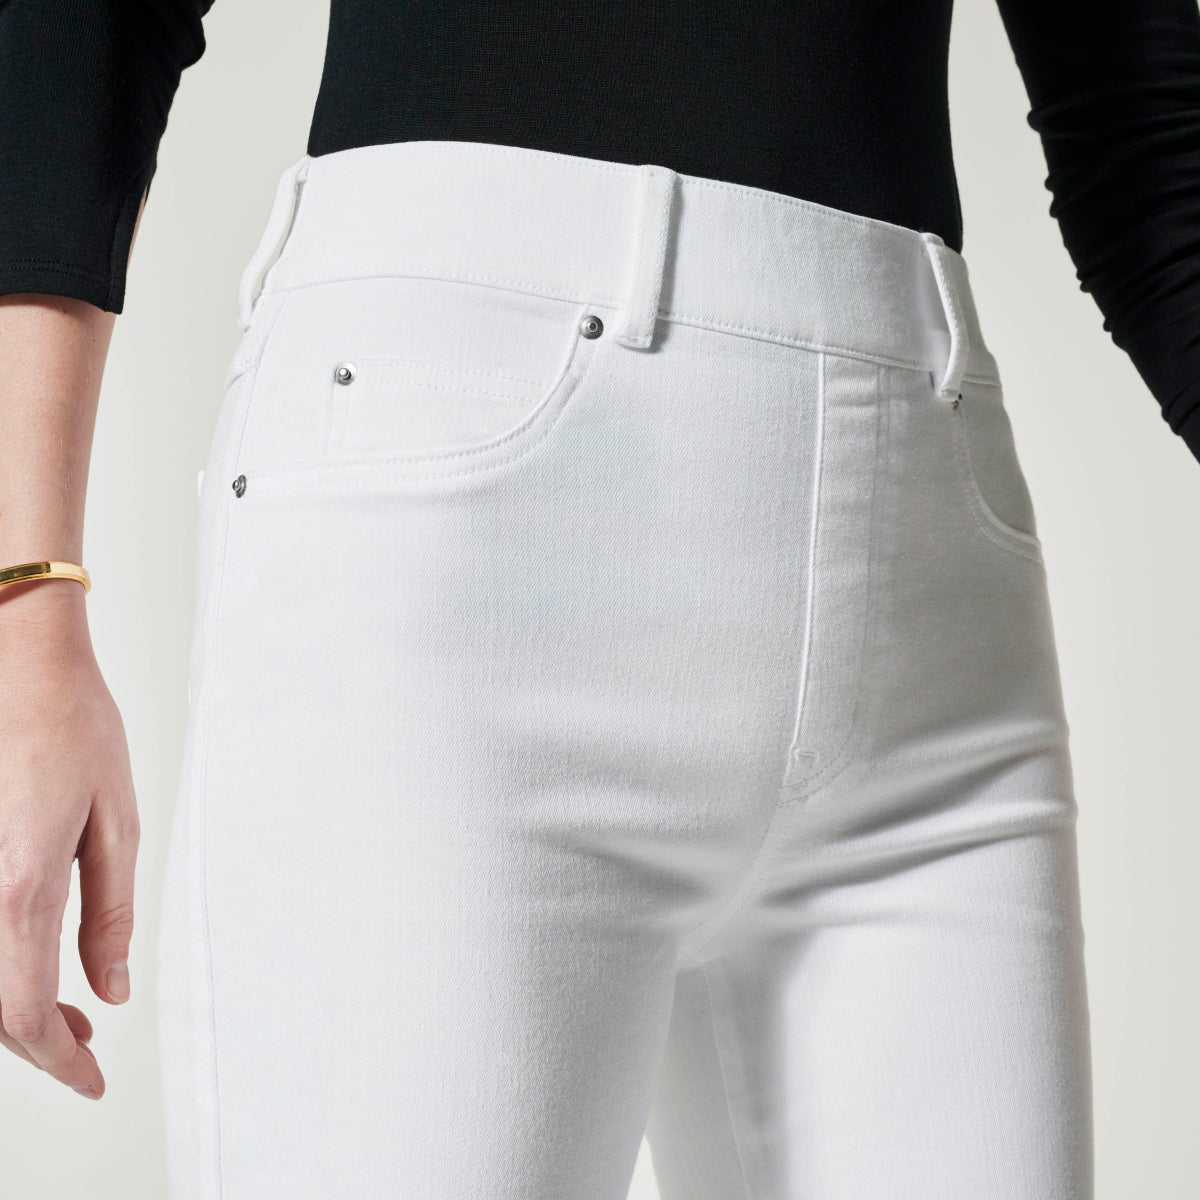 SPANX Women's White Skinny Jeans, White, X-Small 